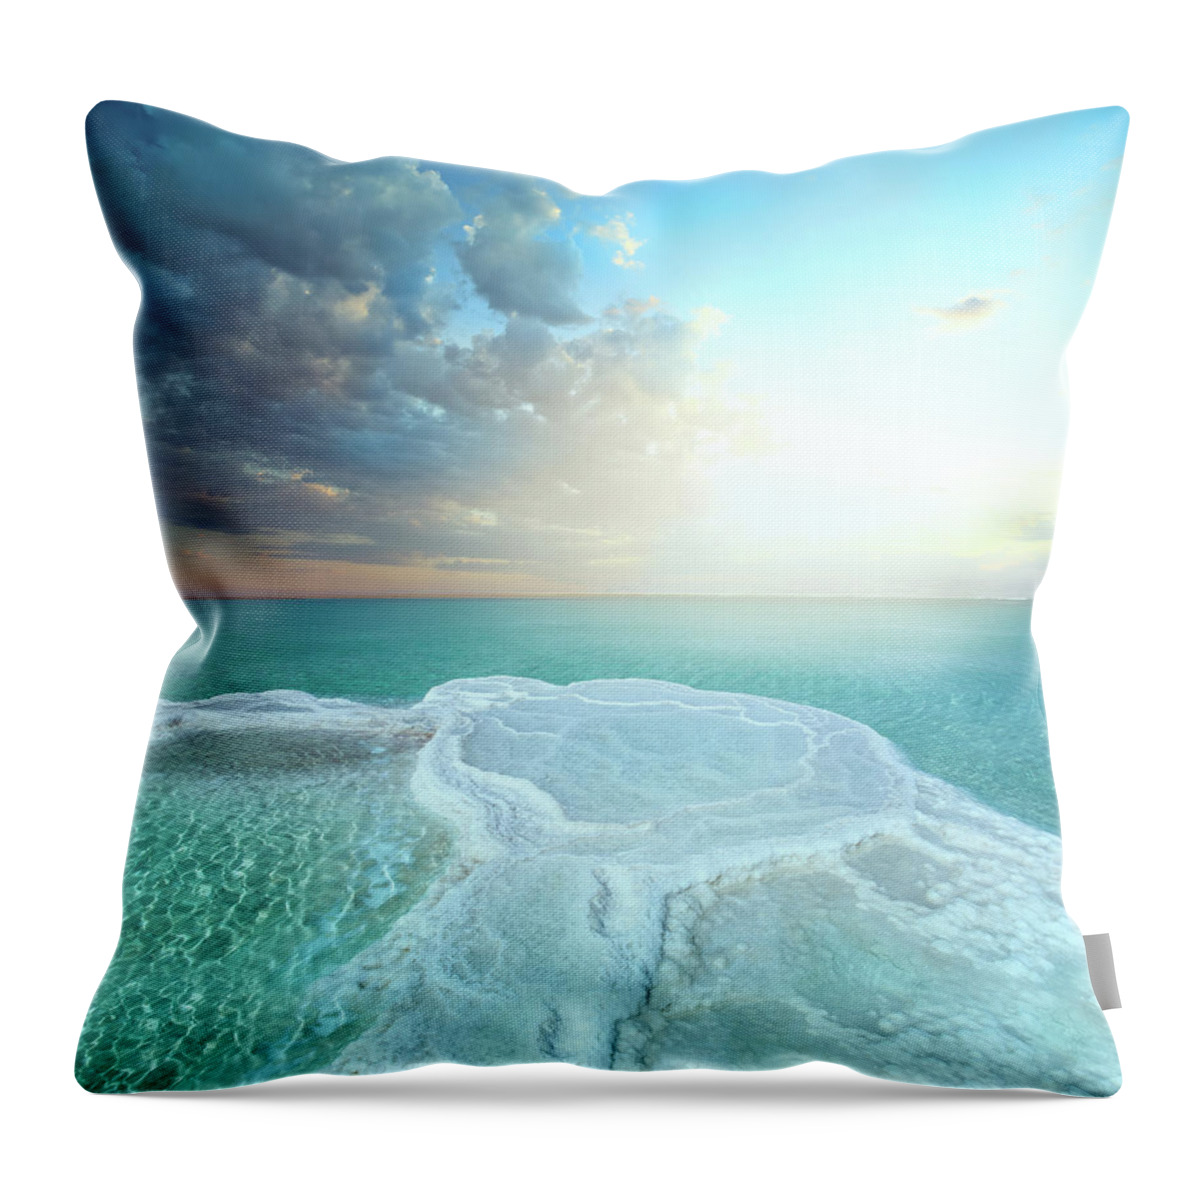 Mineral Throw Pillow featuring the photograph Salt Field In Dead Sea by Dtokar